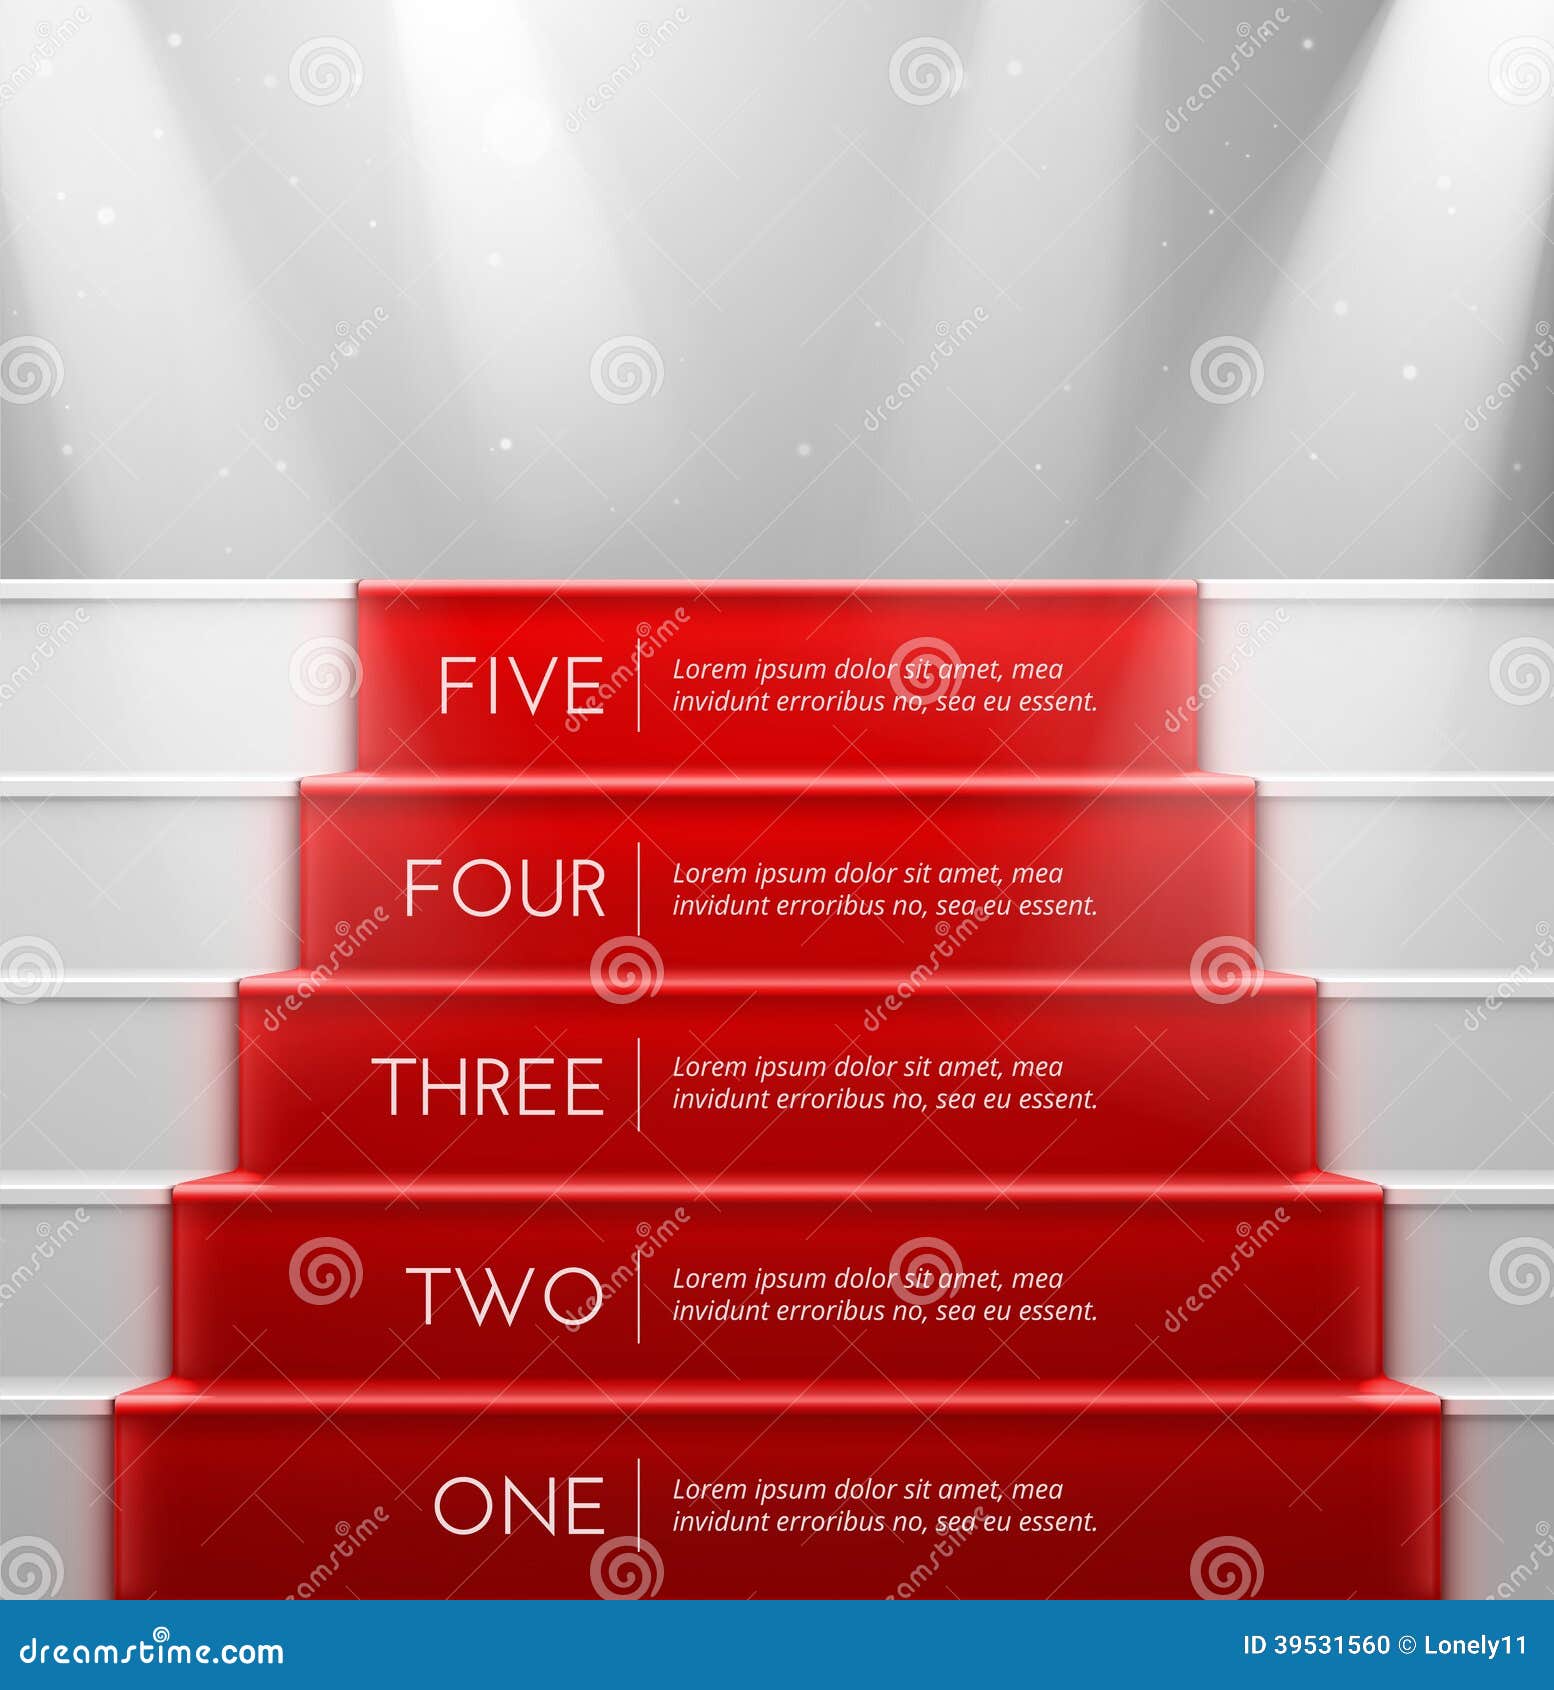 five steps